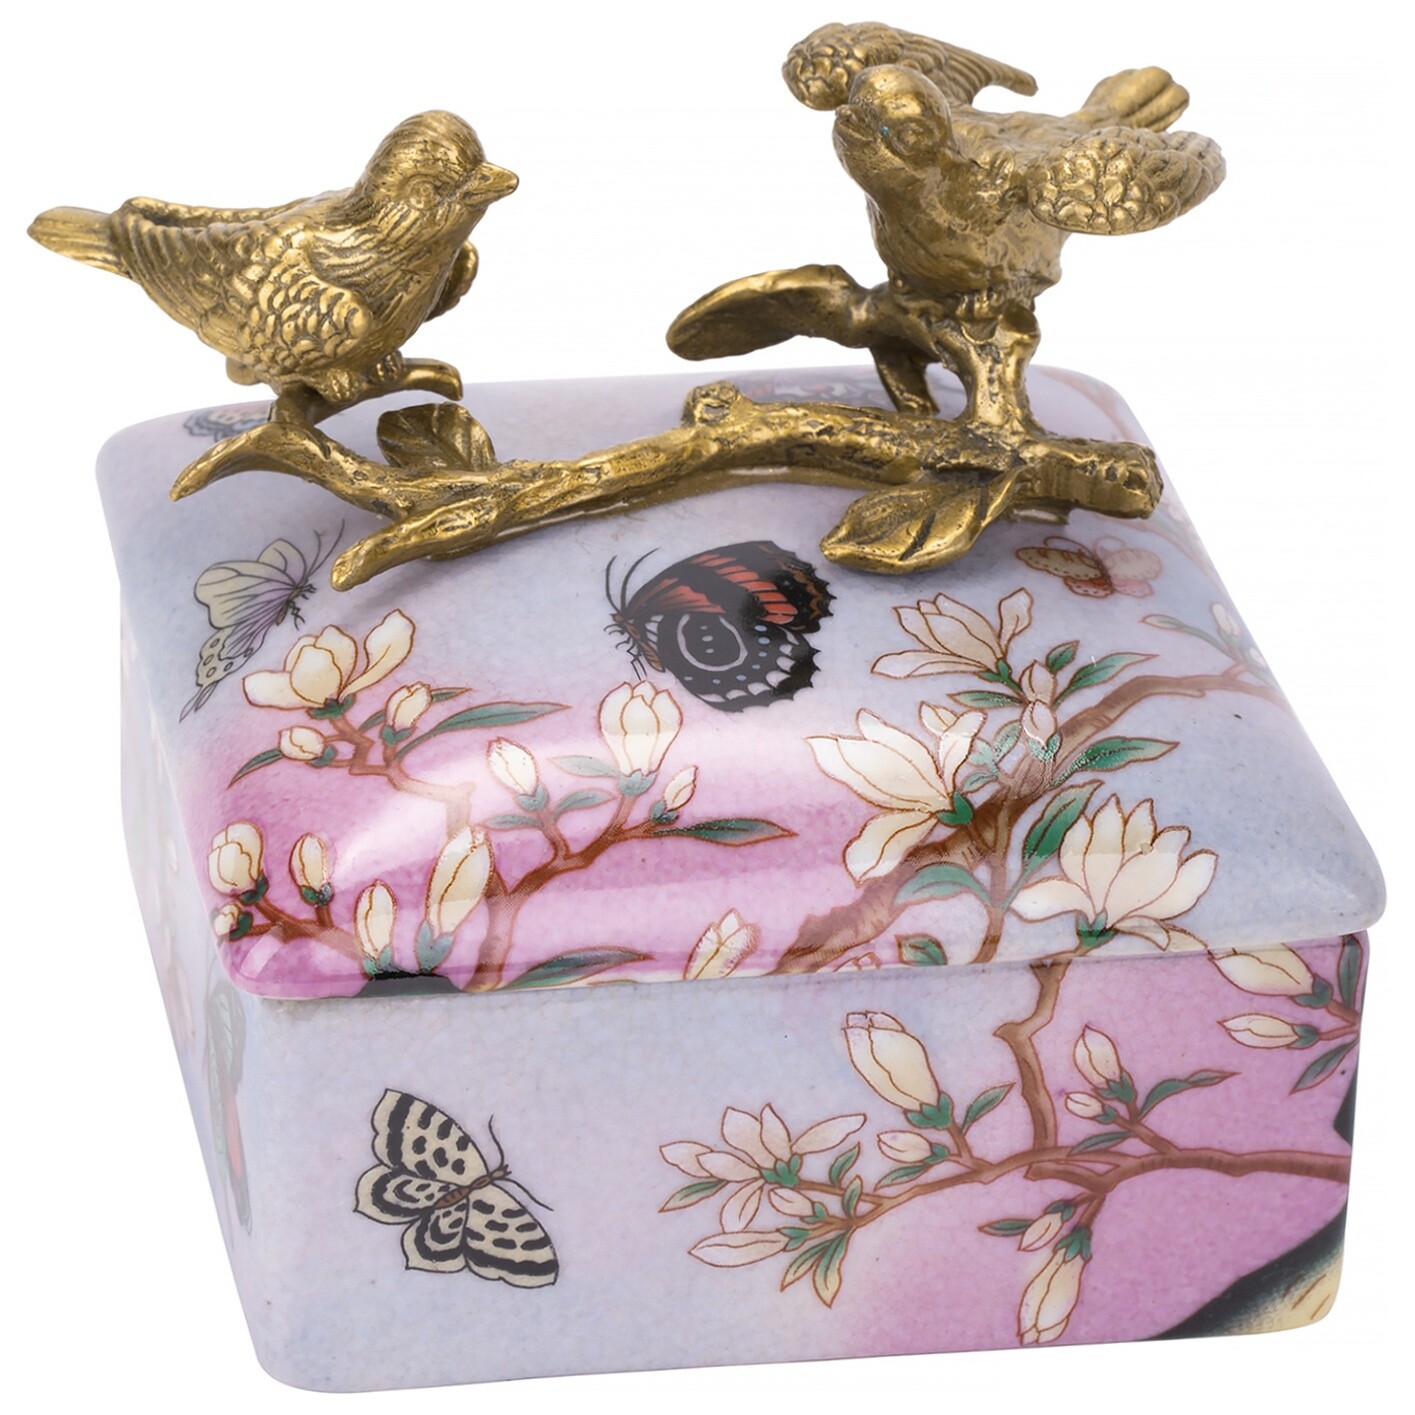 Шкатулка фарфоровая с птицами квадратная 10 см розовая, бронза 31G2591-B100C-HP1534